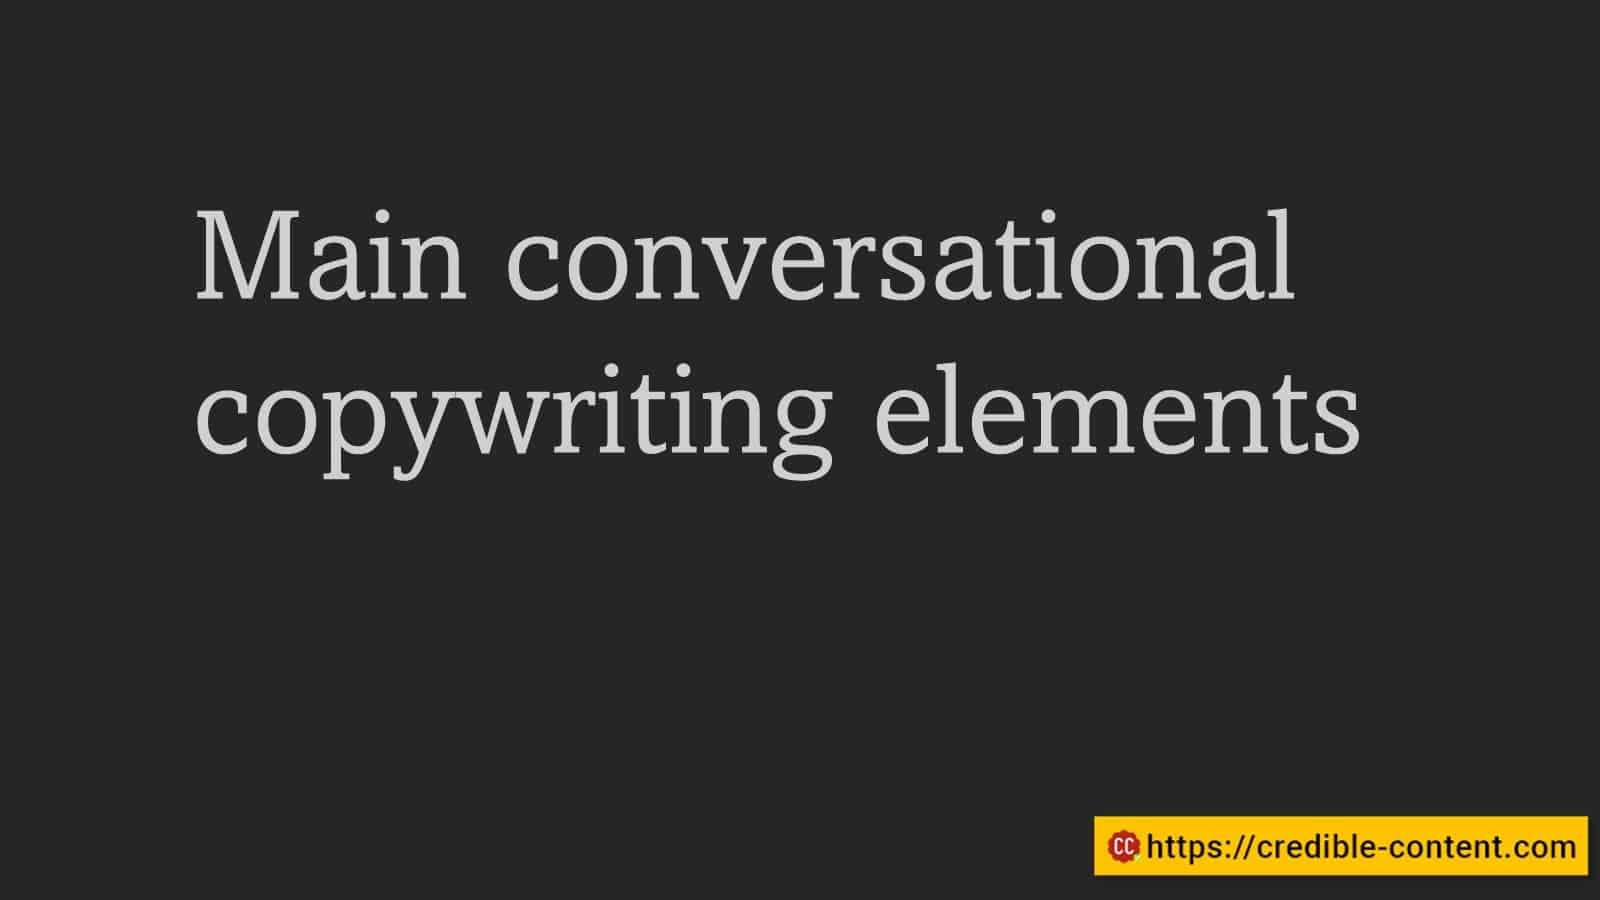 Main conversational copywriting elements